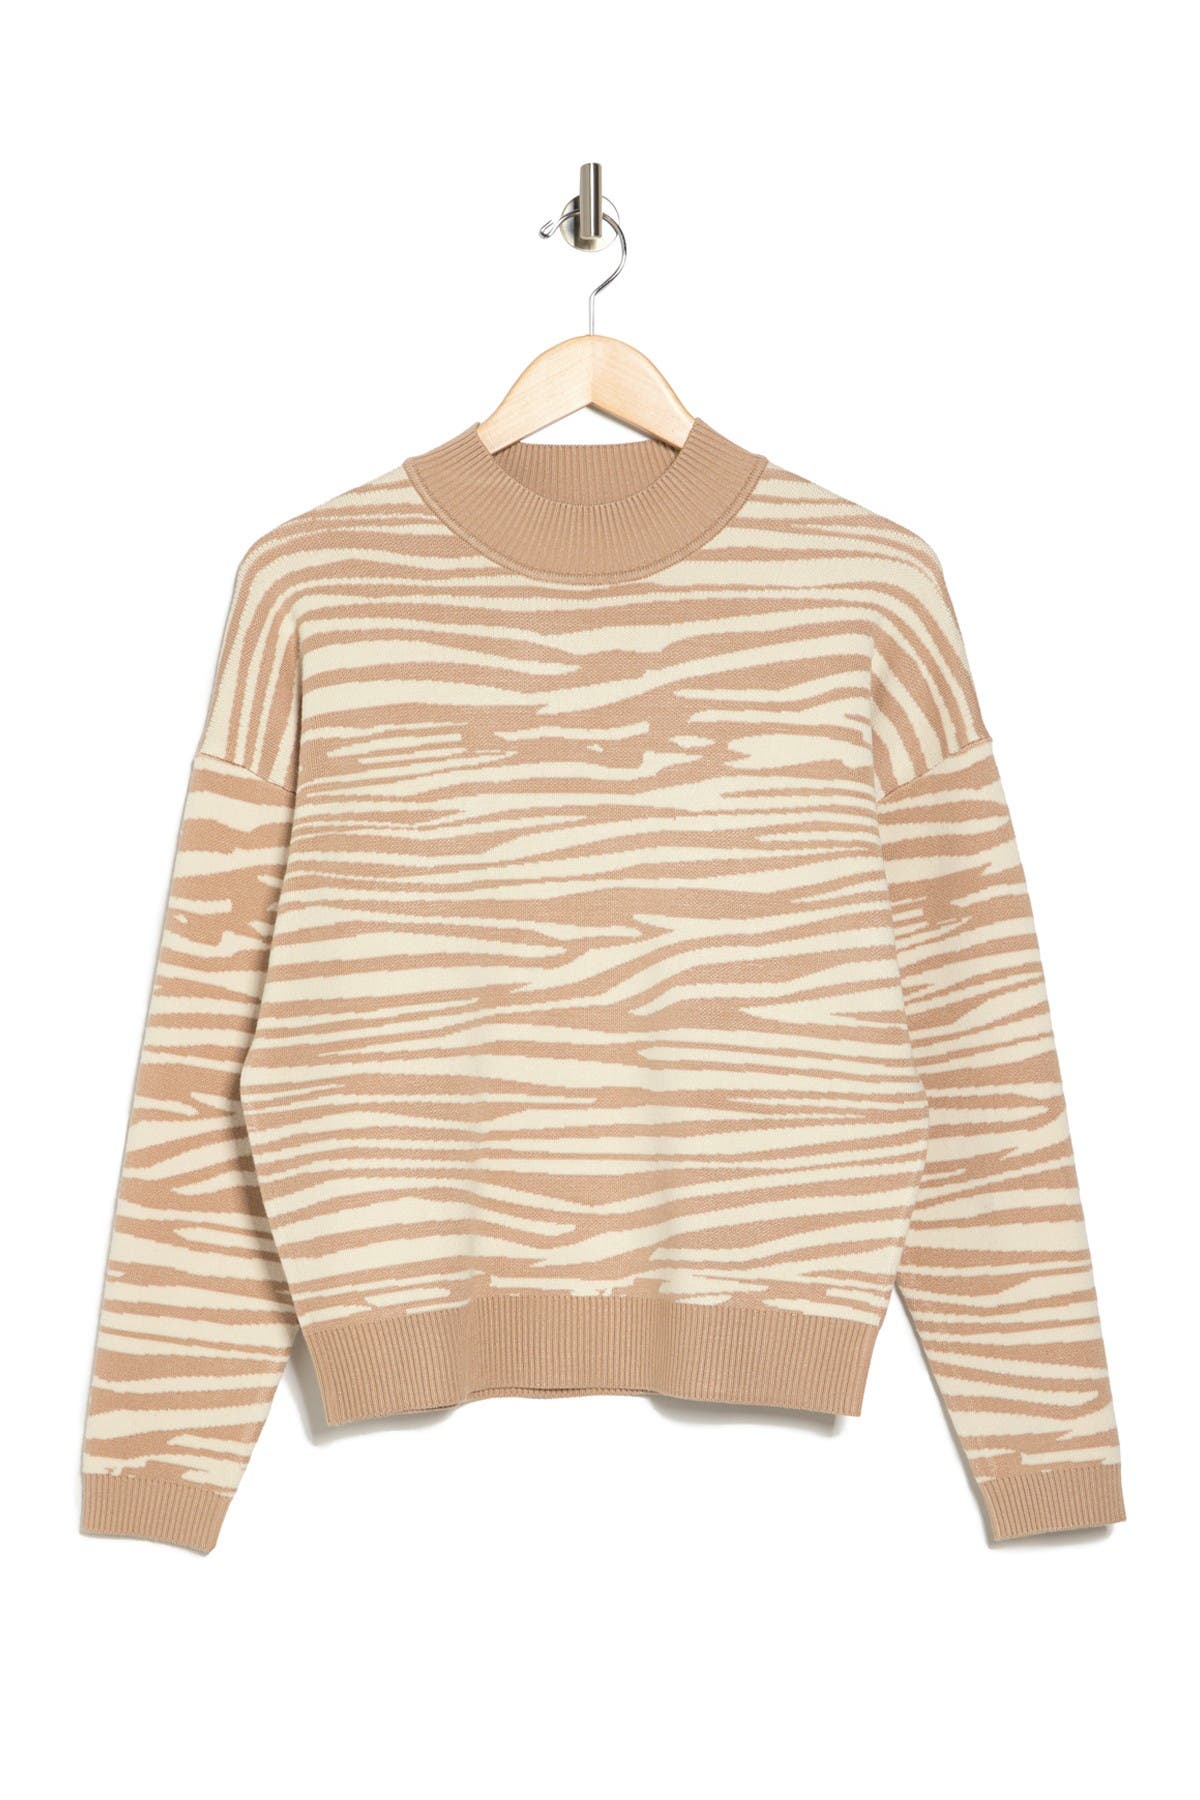 WAYF | Intarsia Zebra Print Sweater | Nordstrom Rack